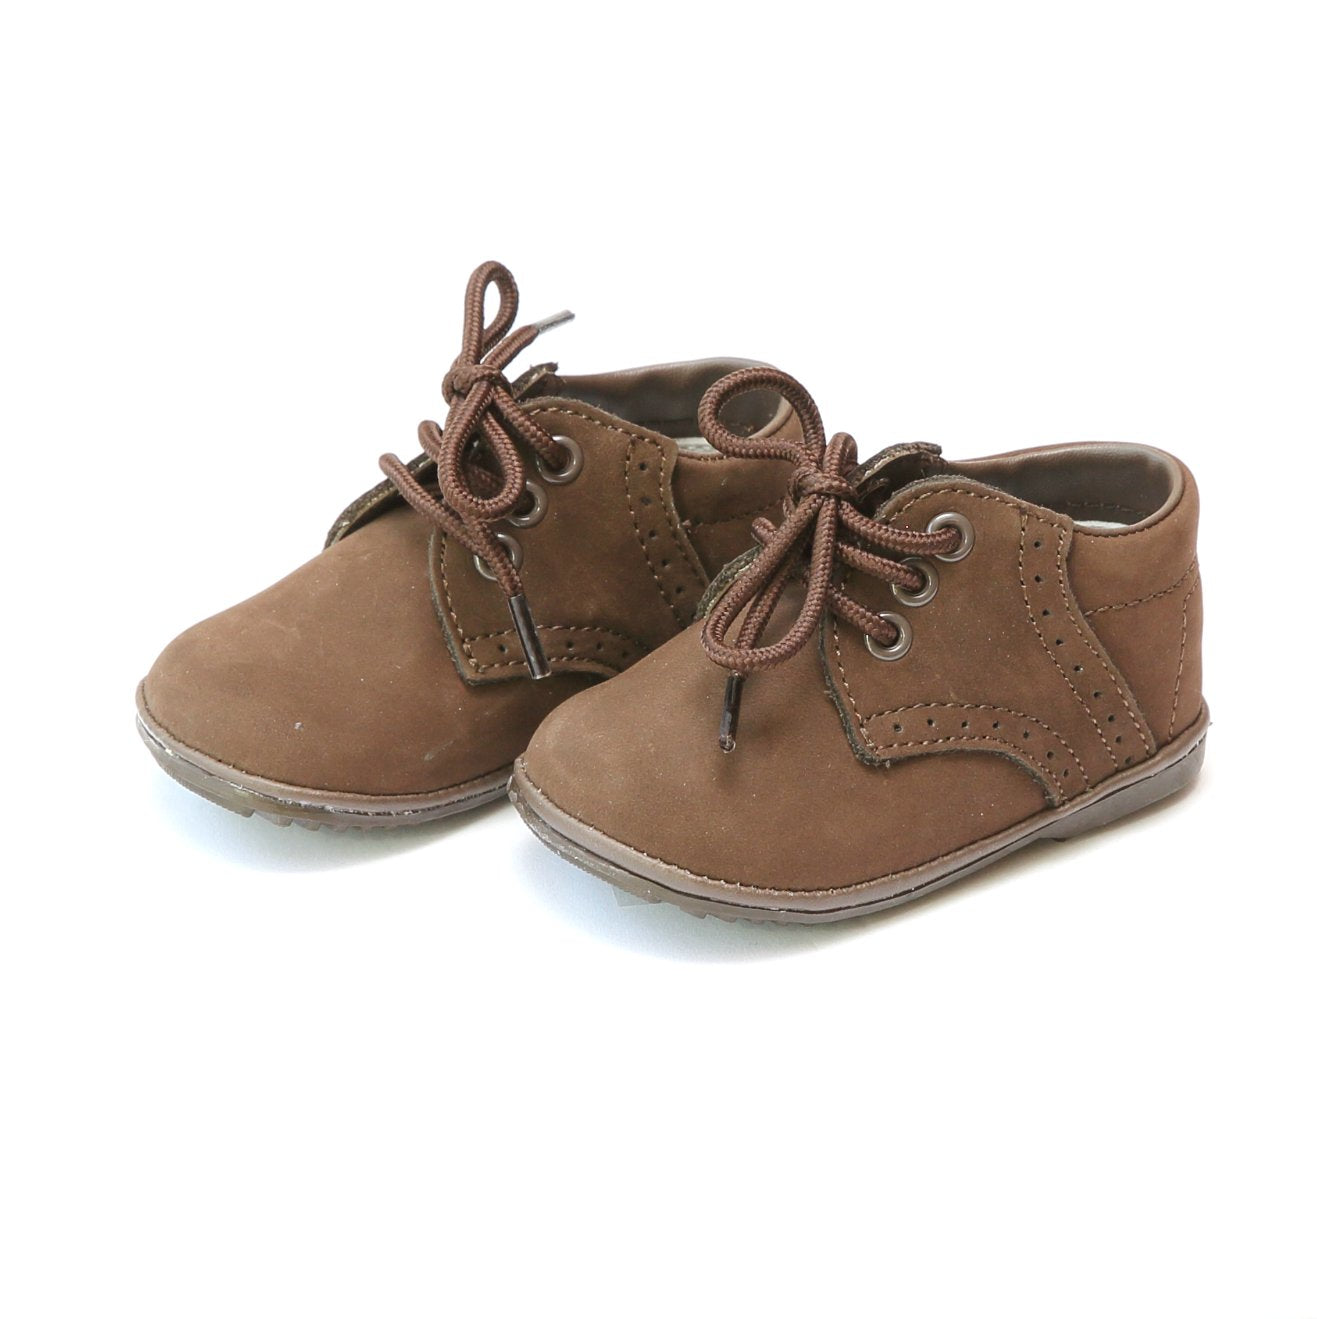 James Boy's Nubuck Brown Leather Lace Up Shoe